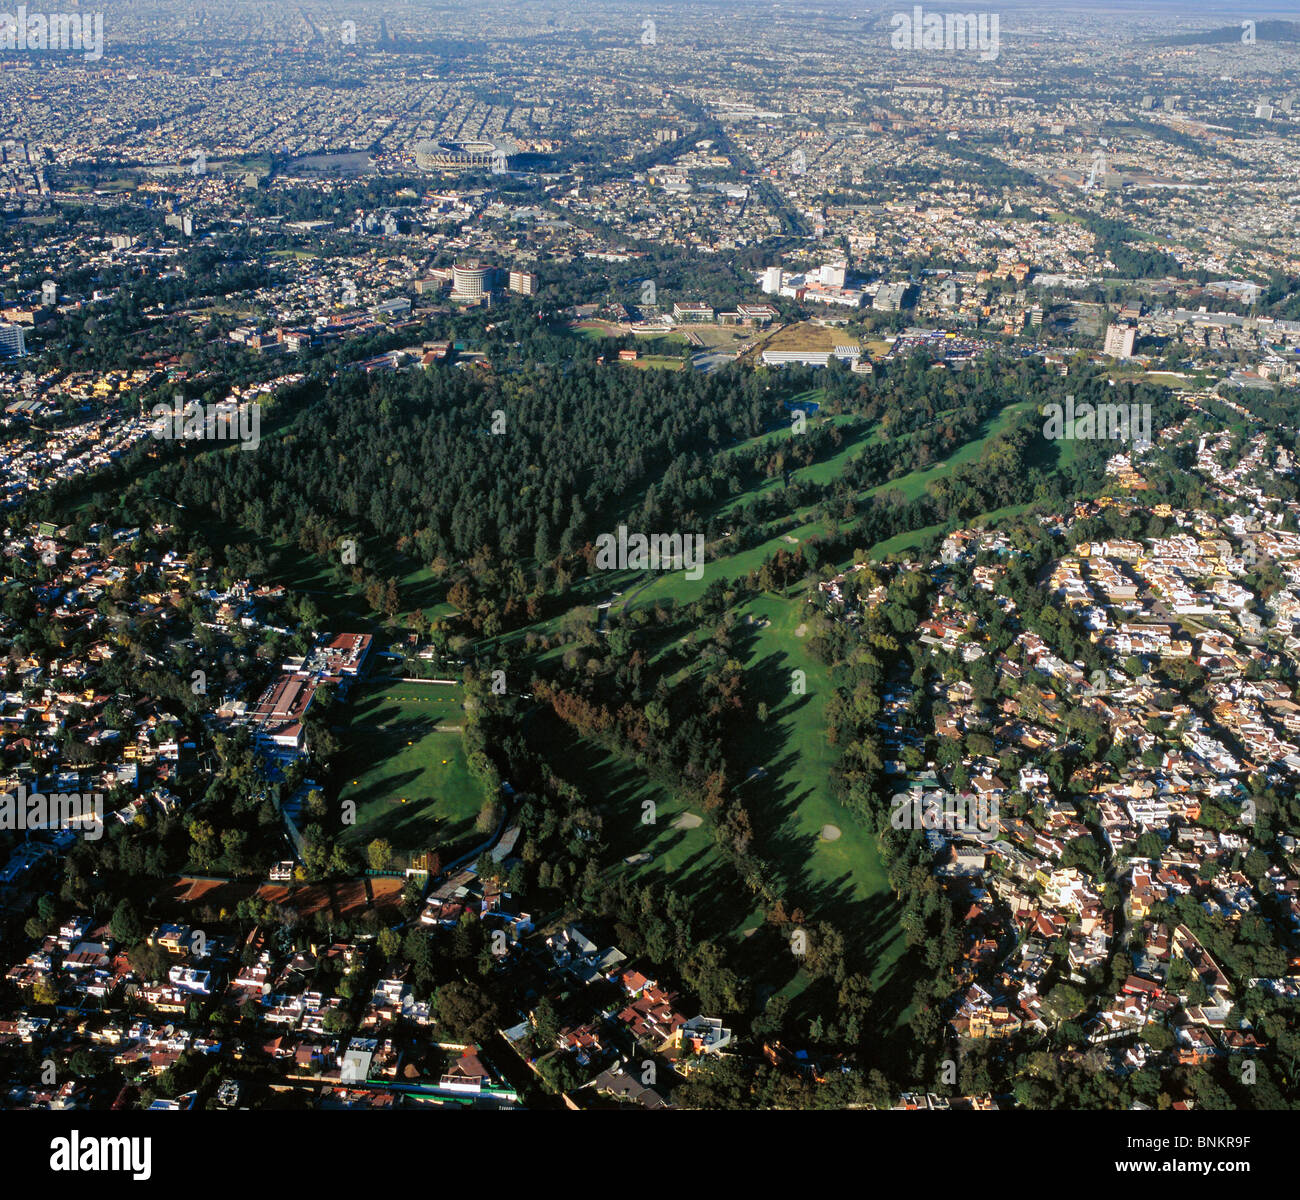 aerial view above Club de Golf Mexico Mexico Golf Club Tlalpan Mexico City  Stock Photo - Alamy